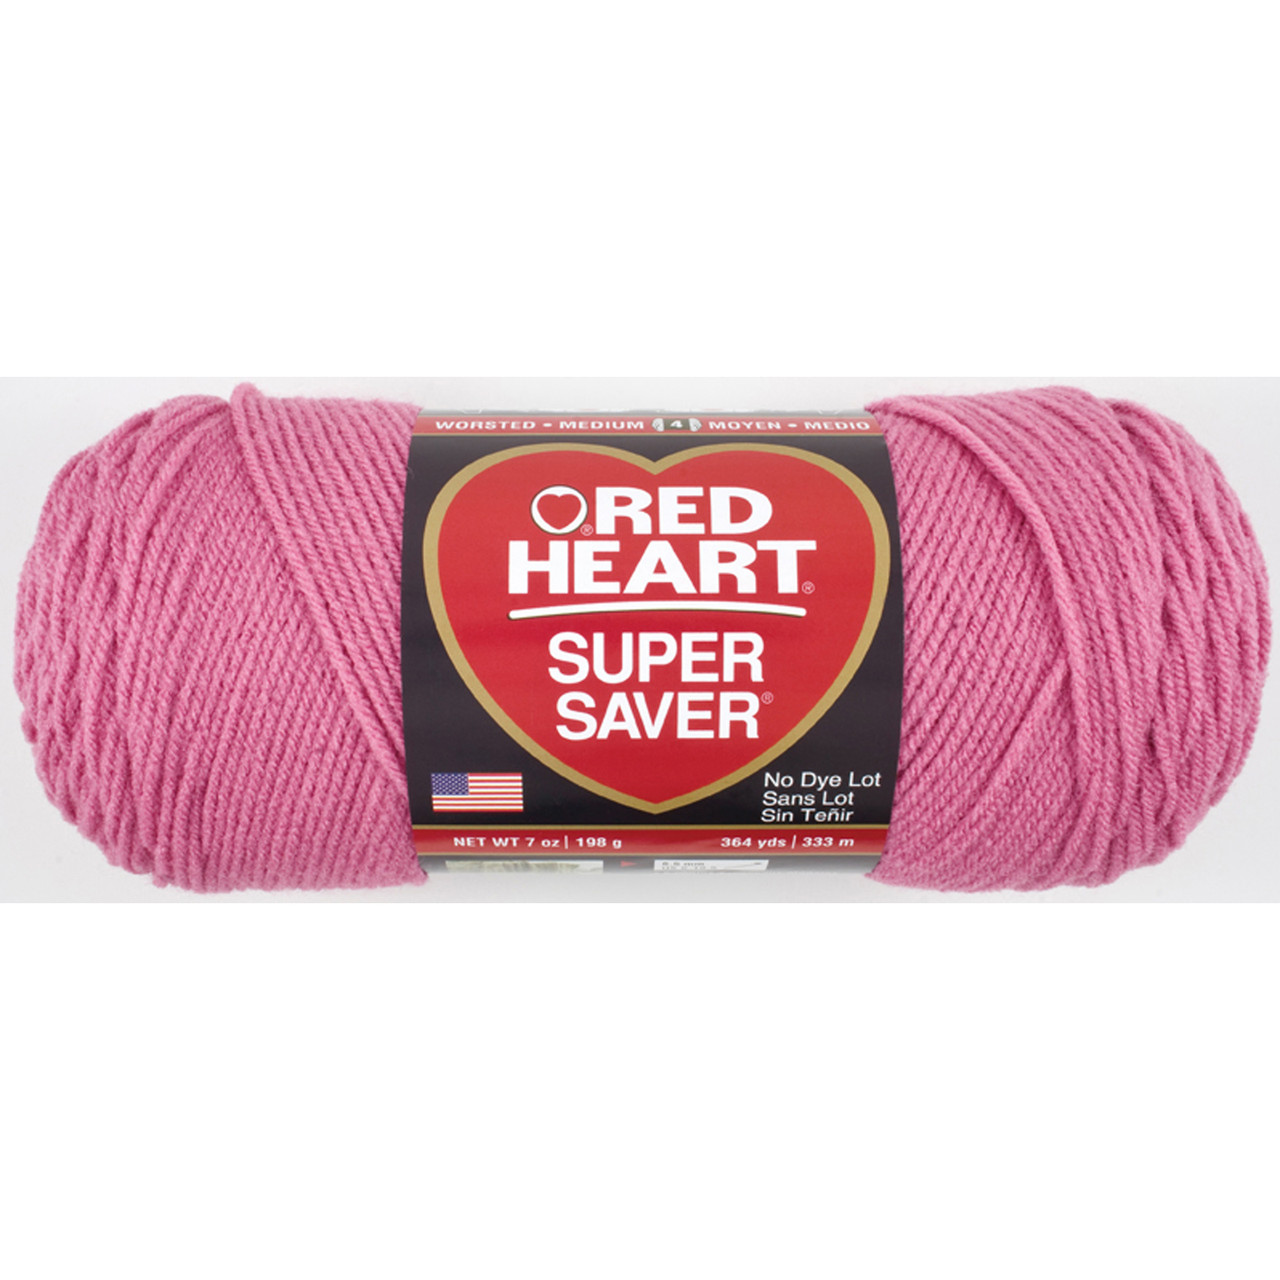 Red Heart Super Saver Light Gray Yarn - 3 Pack of 198g/7oz